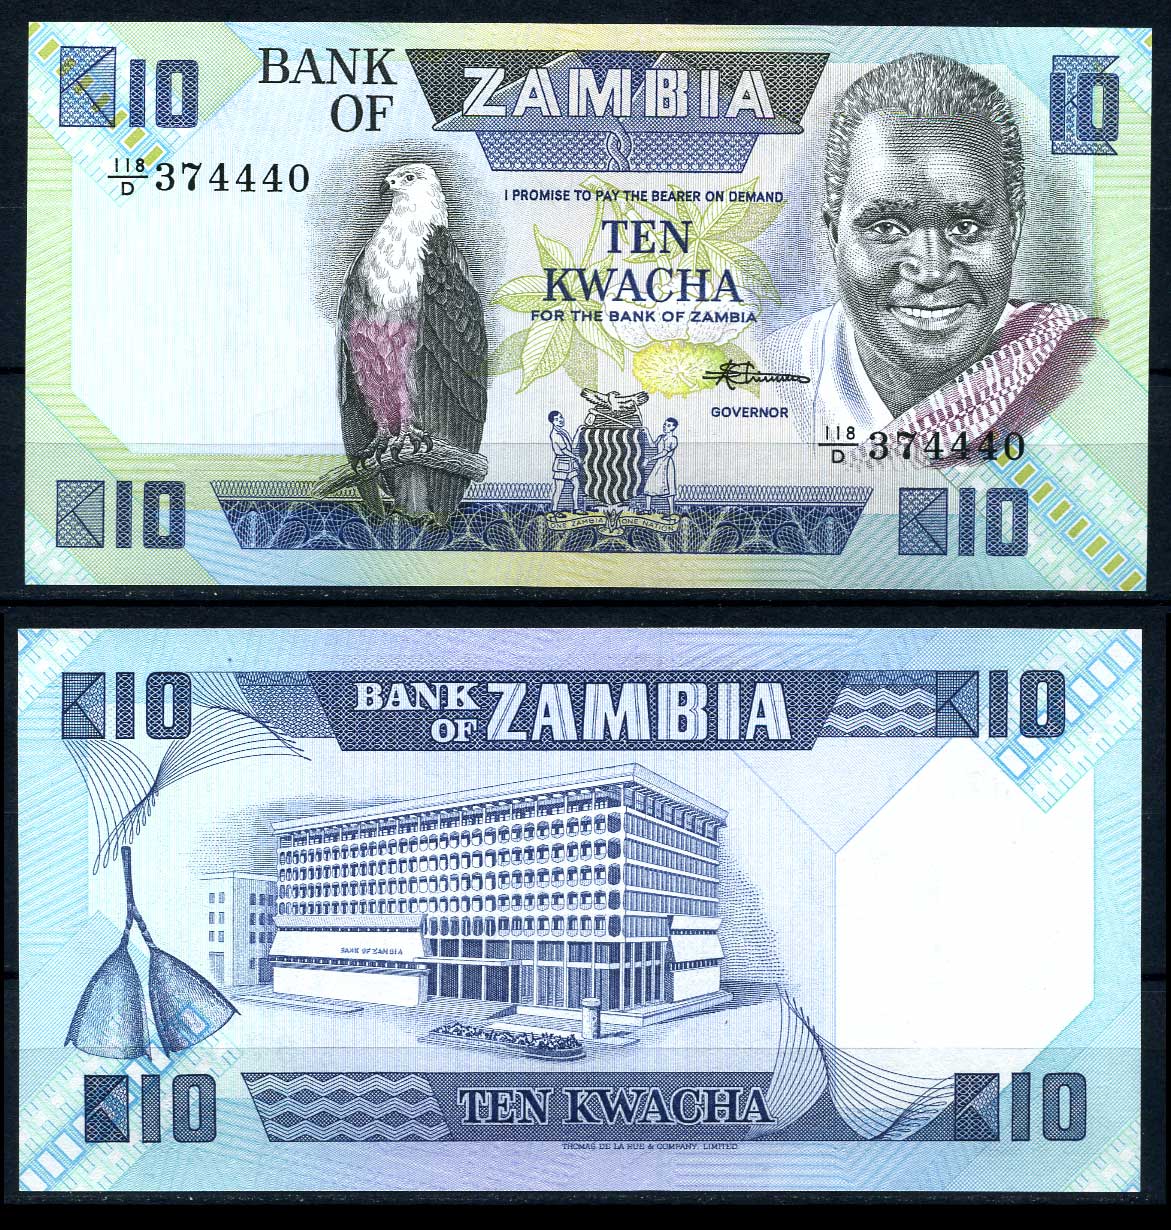 50 kwacha bank of zambia forex financial power